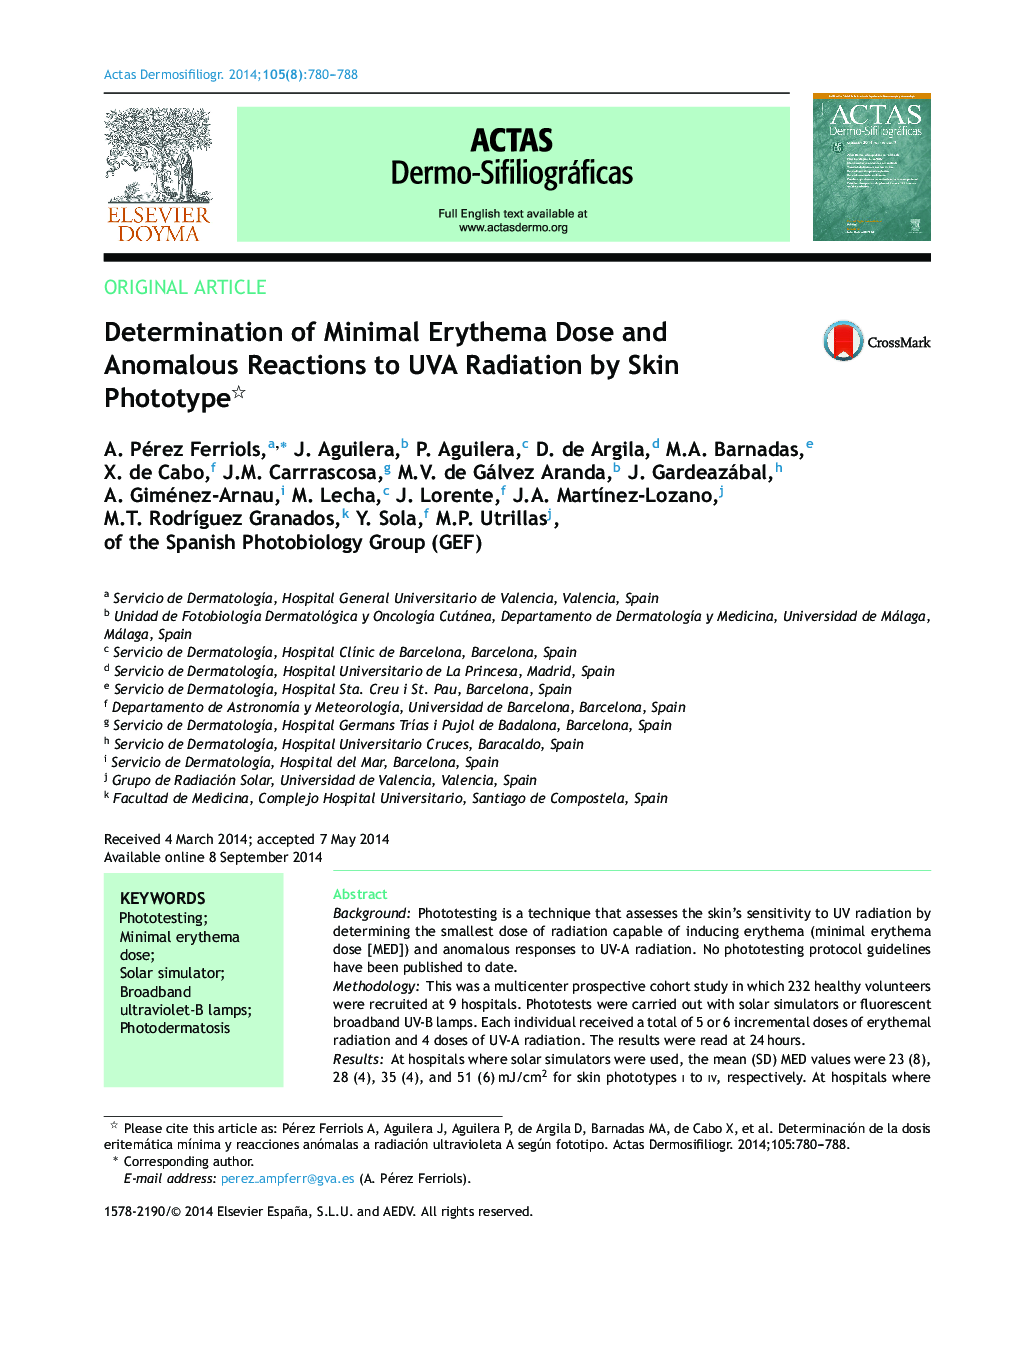 Determination of Minimal Erythema Dose and Anomalous Reactions to UVA Radiation by Skin Phototype 